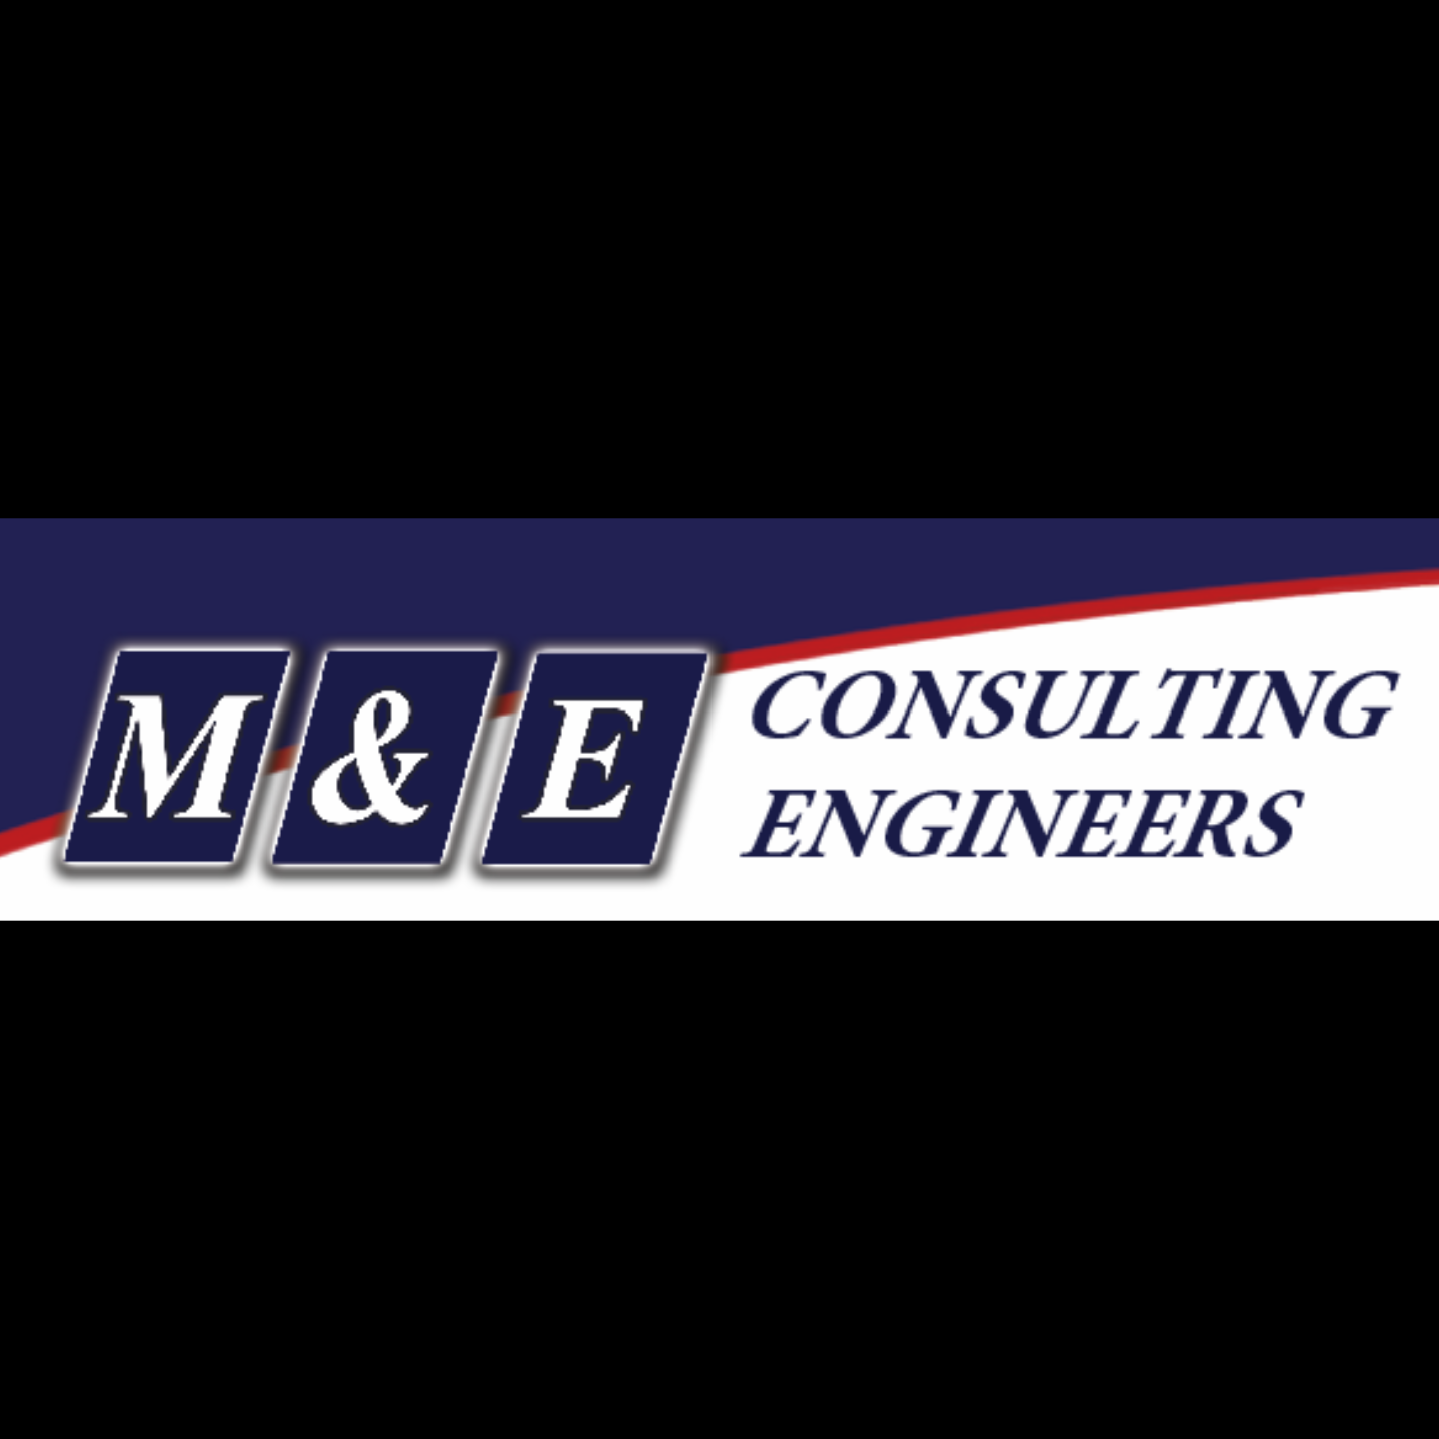 M&e Engineering Consultants